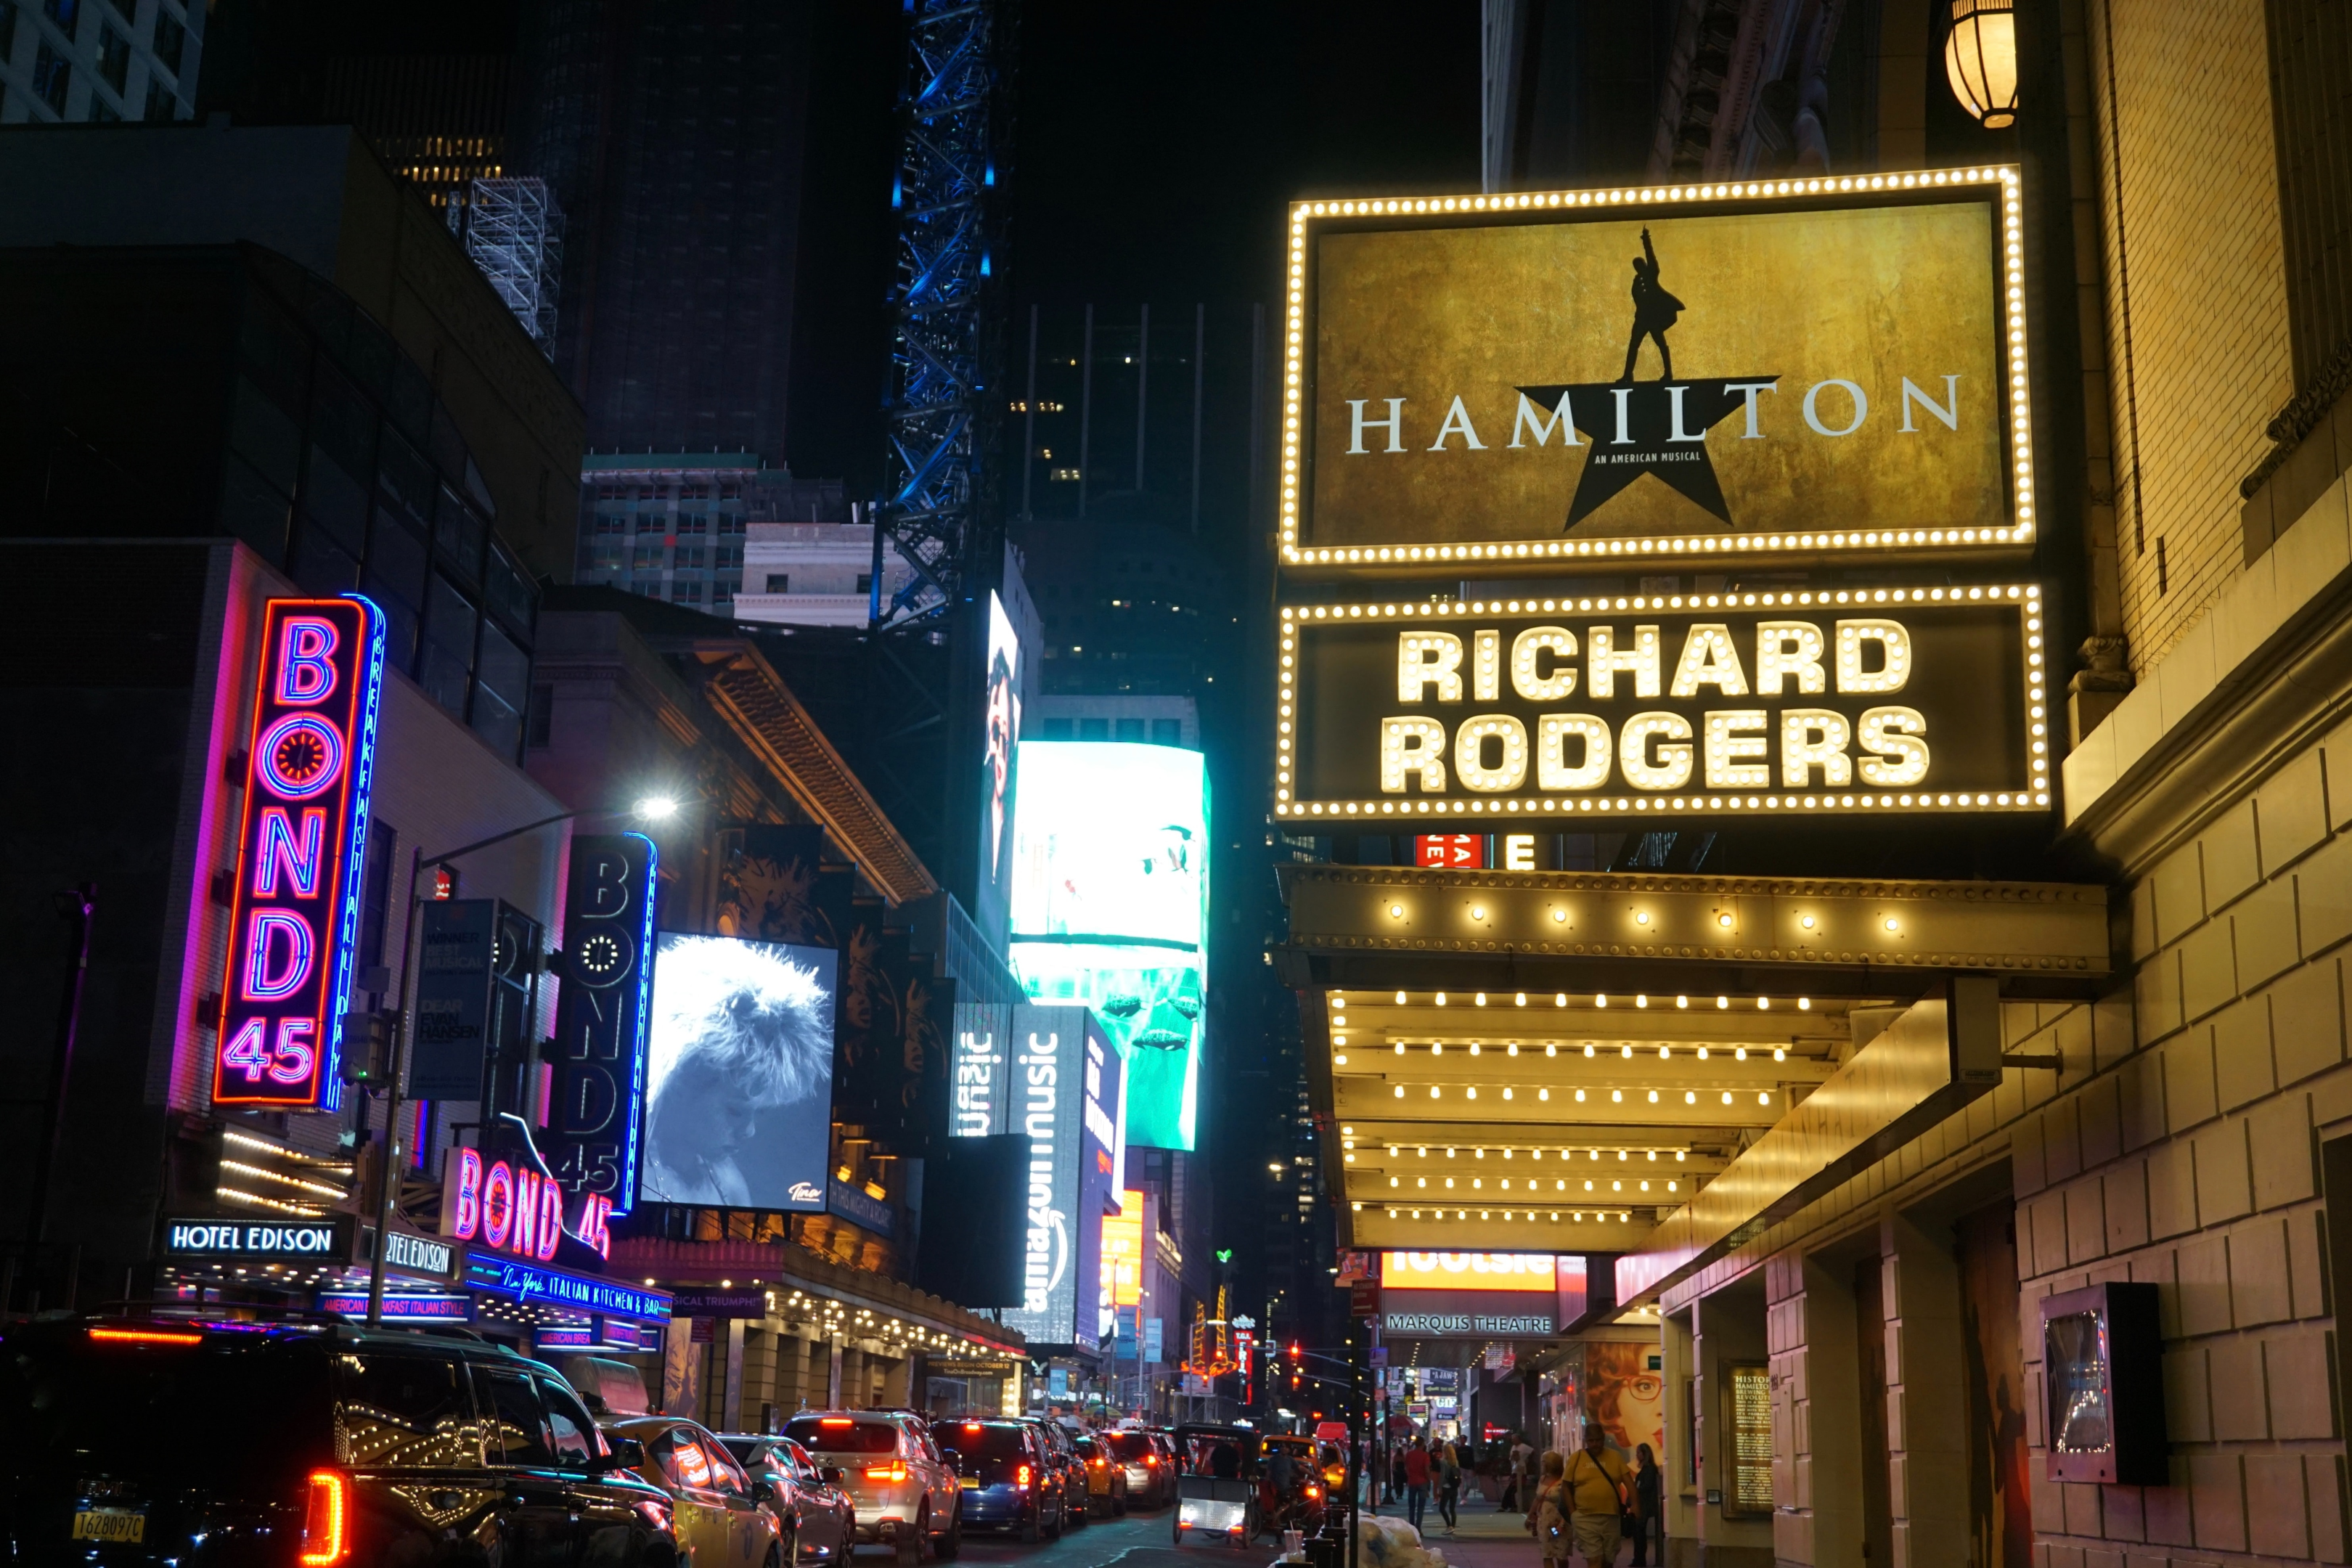 Hamilton | Broadway events this 2022